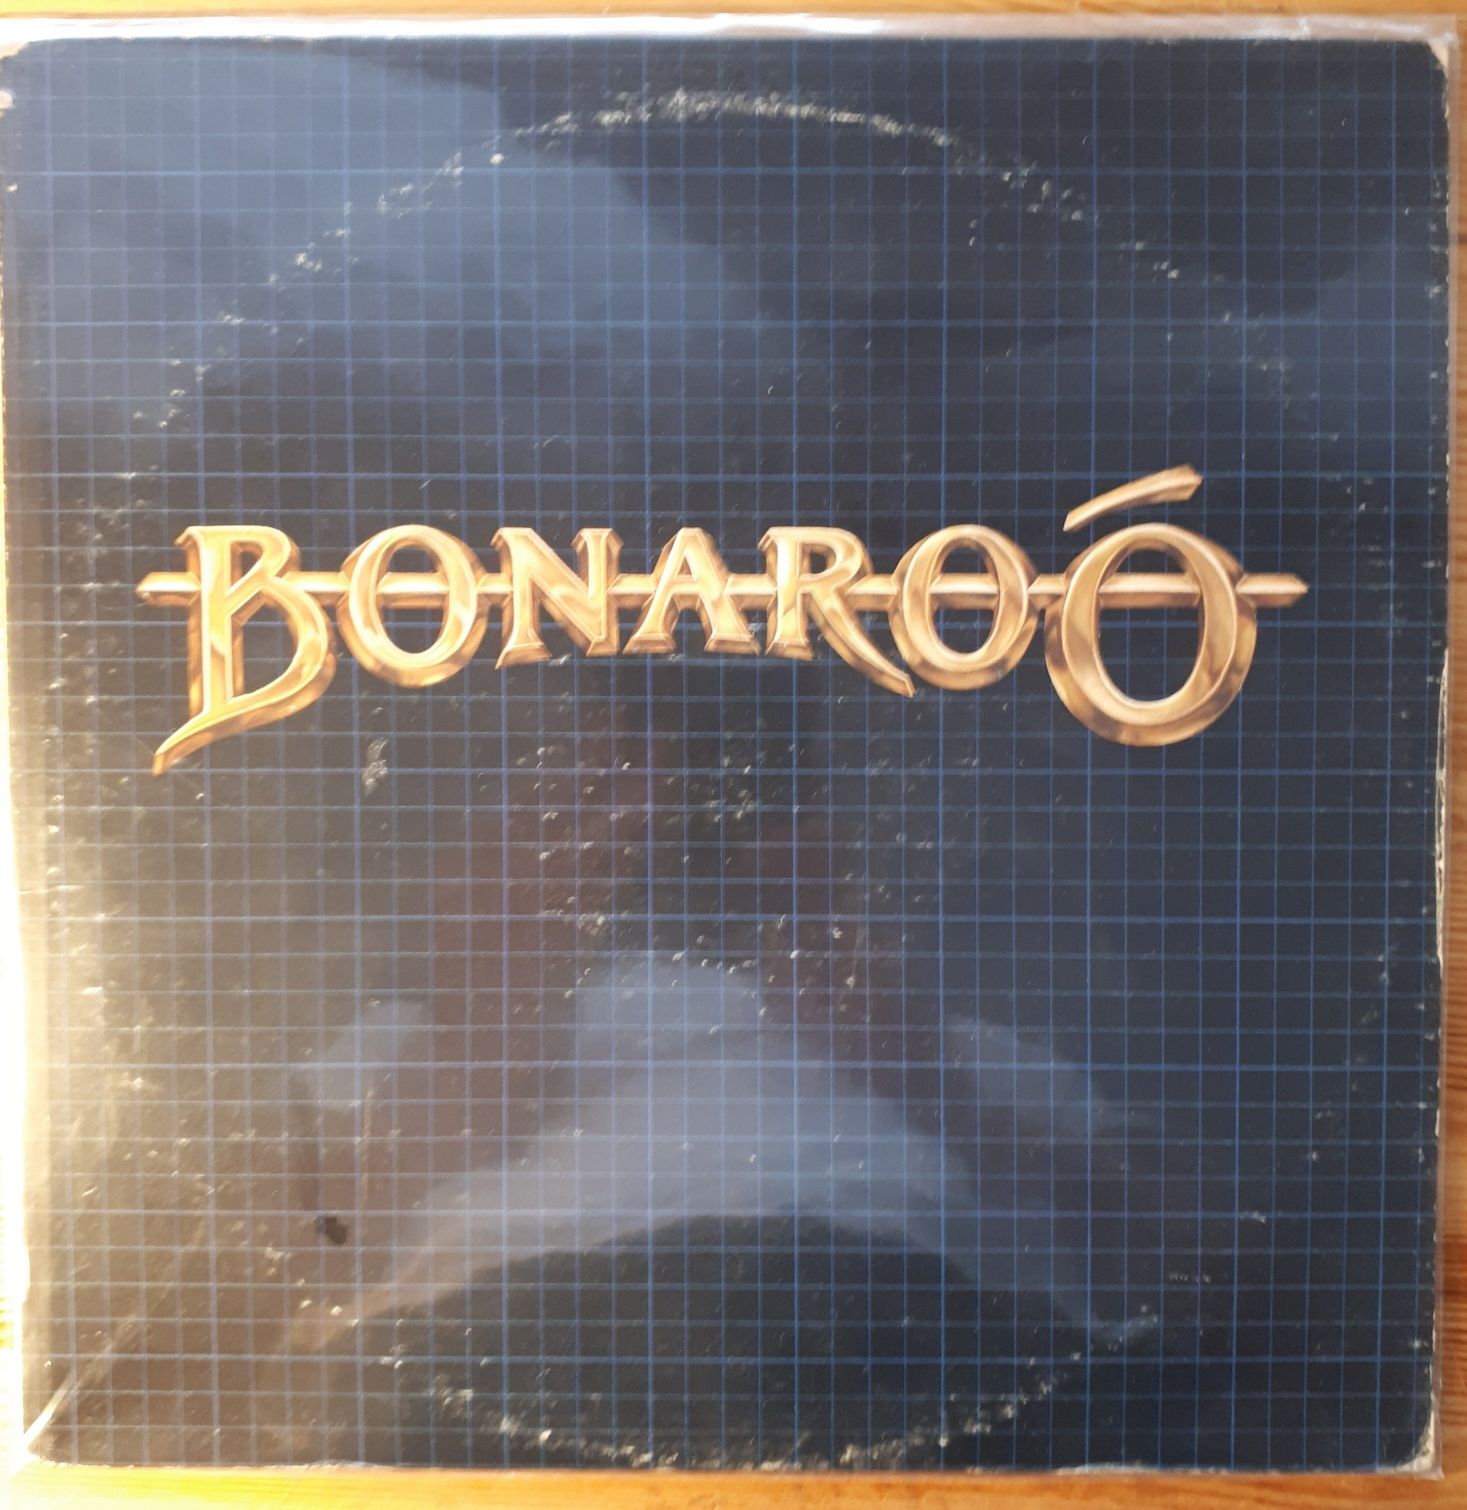 Płyta winyłowa -Bonaroo- Bonaroo, LP, Stereo, EX+/EX-